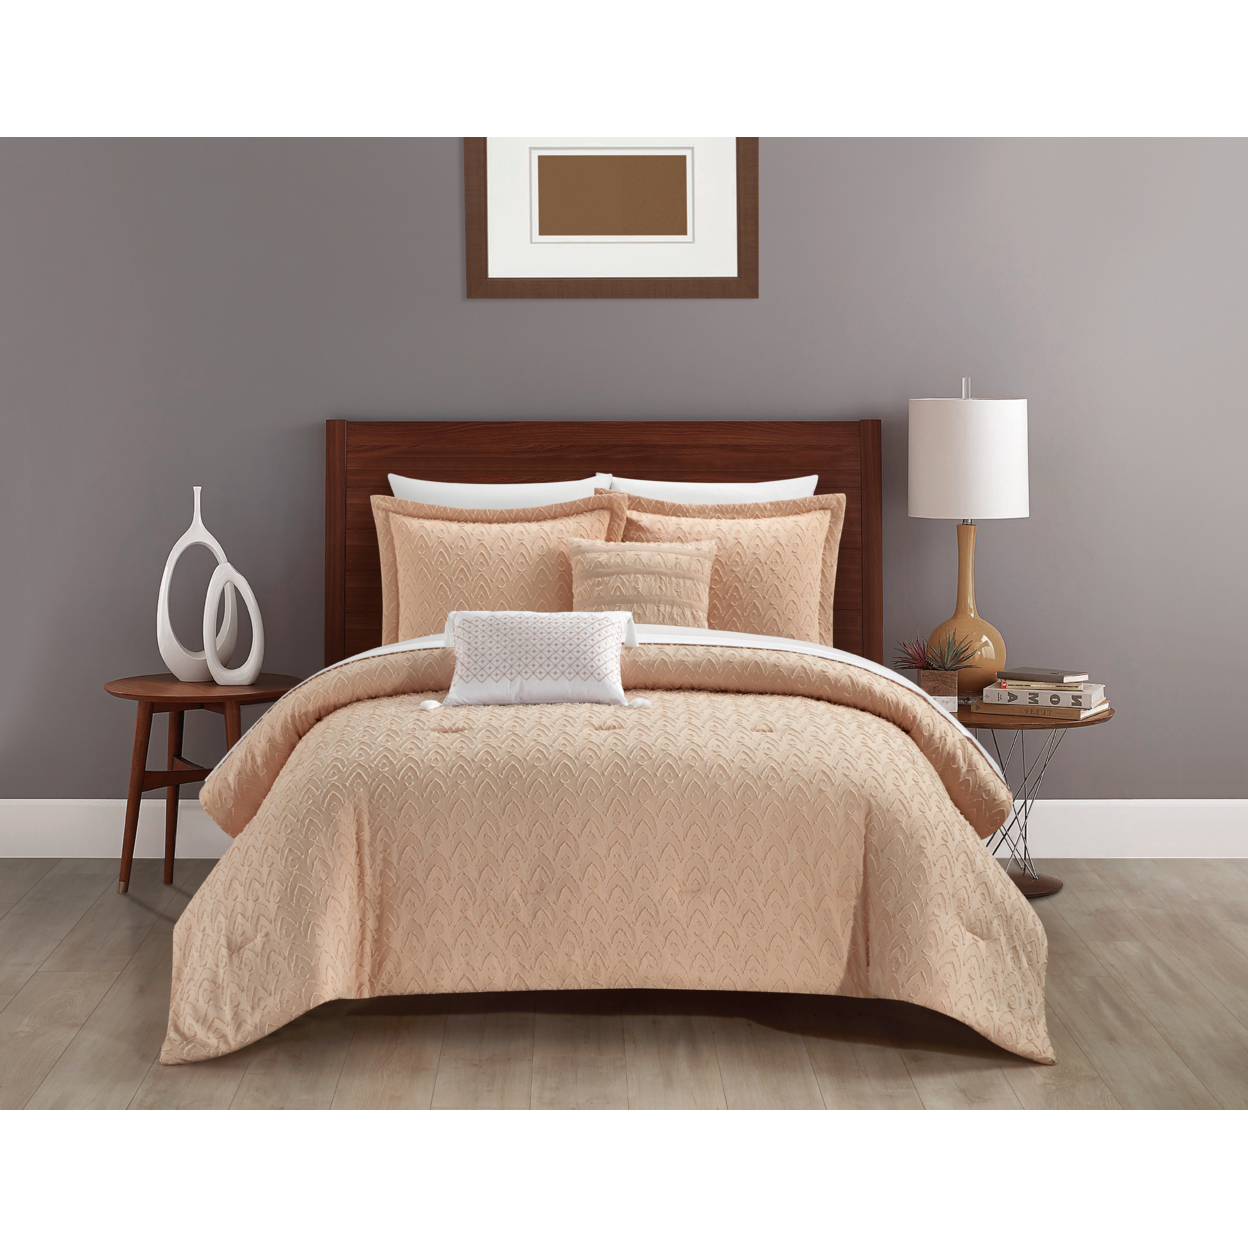 Deign 5 Piece Comforter Set Clip Jacquard Geometric Pattern Design Bedding - Blush, King